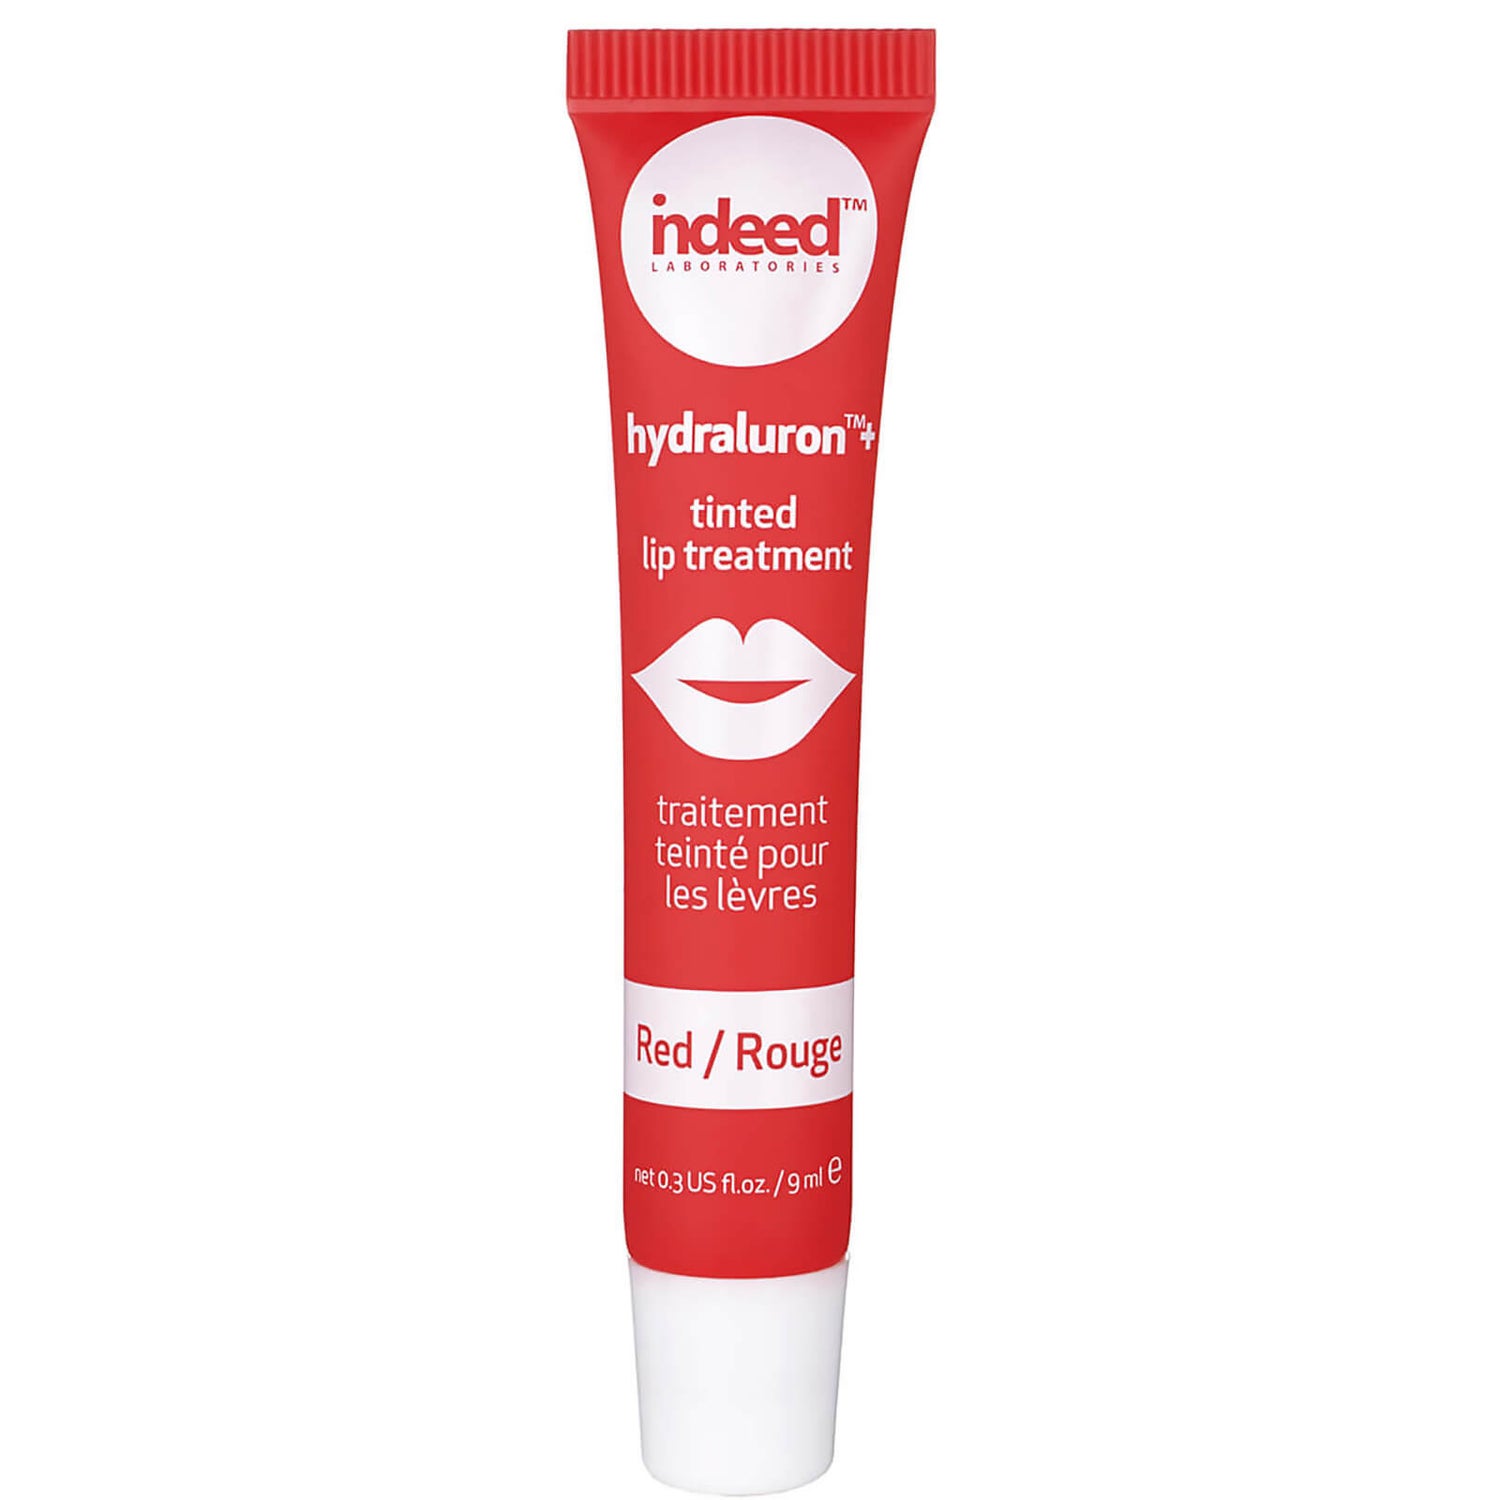 Indeed Labs Hydraluron Tinted Lip Treatment - Red 9ml - Бальзам для губ с тонирующим эффектом